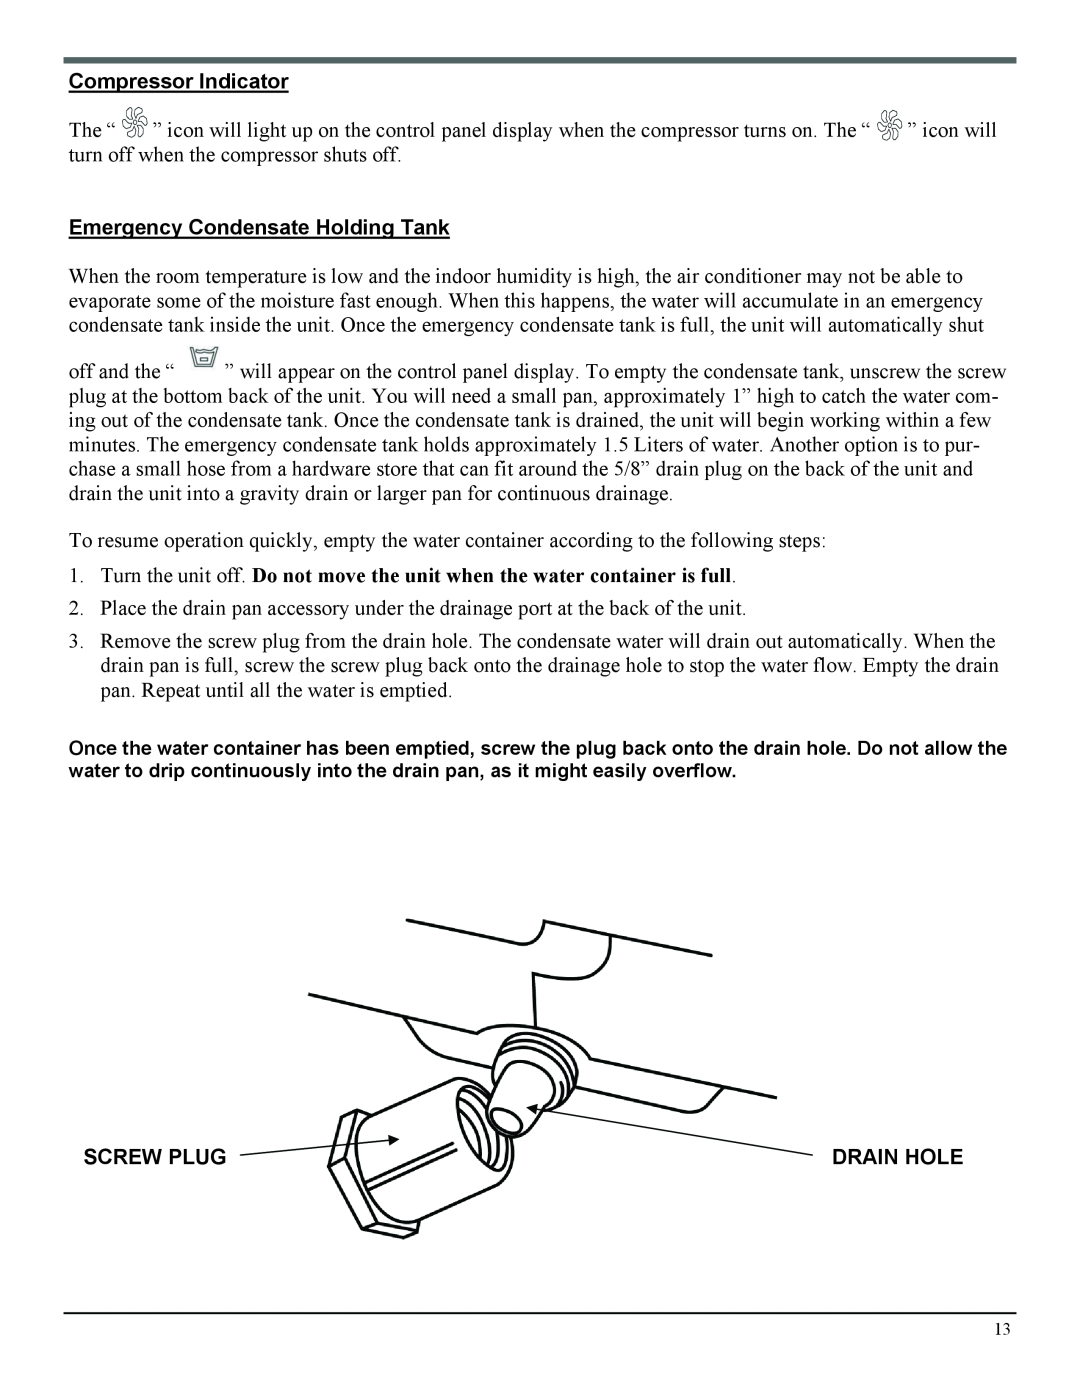 Soleus Air PH3-12R-03 manual Compressor Indicator, Emergency Condensate Holding Tank, Screw Plug, Drain Hole 